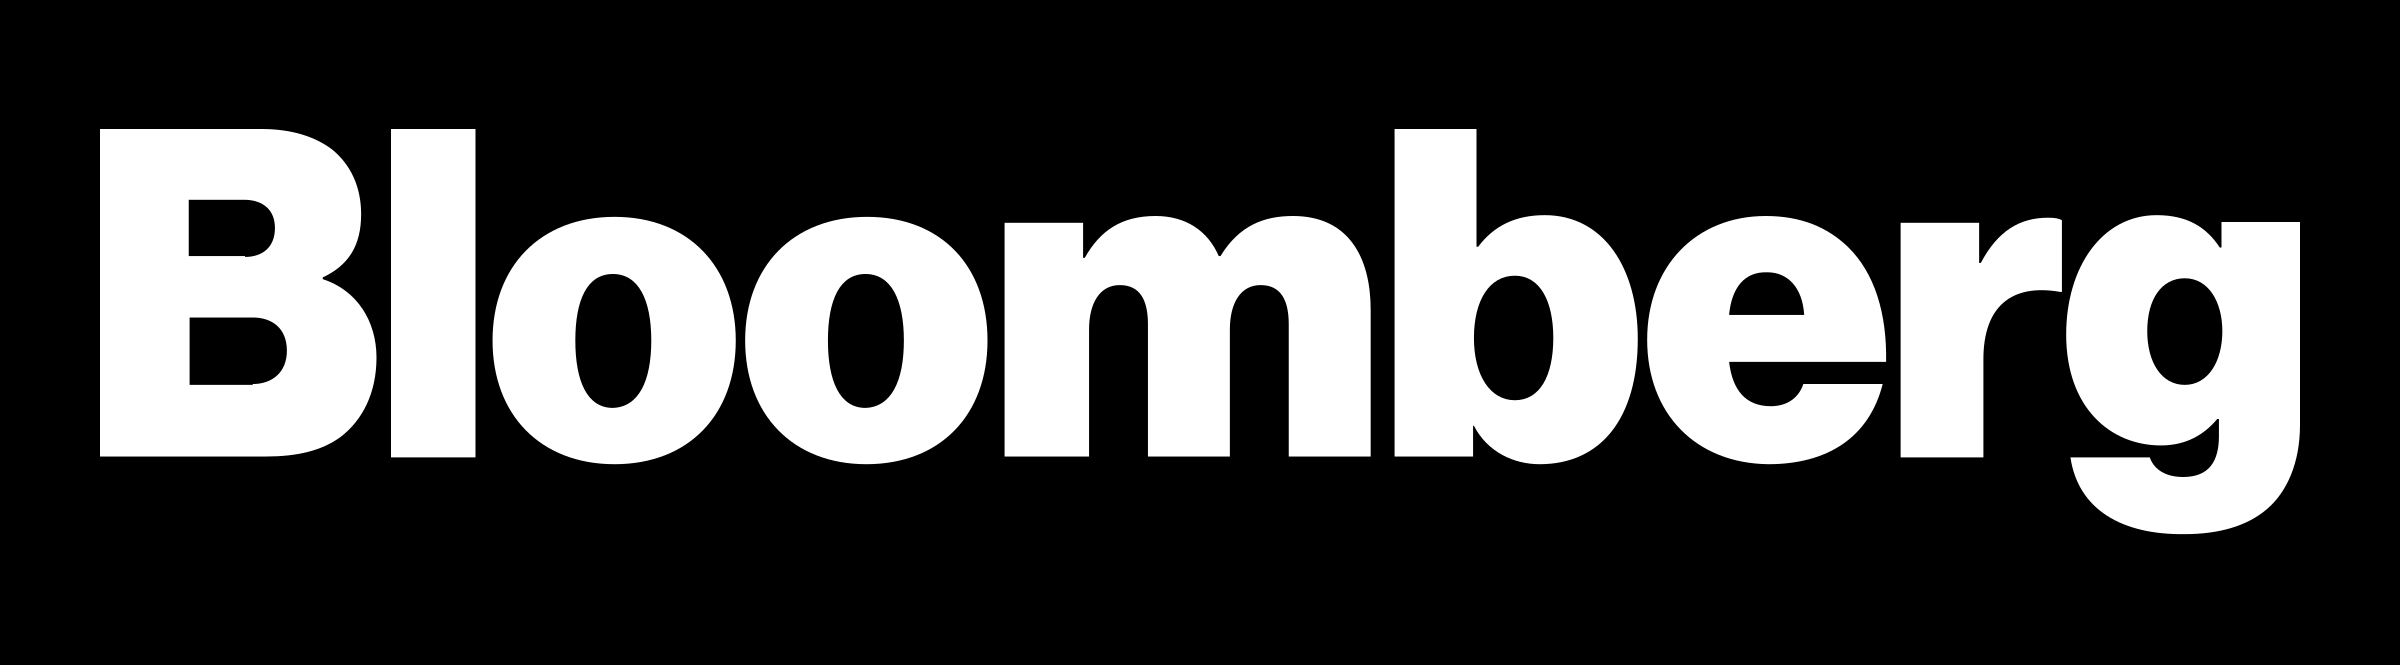 Bloomberg Logo - Bloomberg Logo PNG Transparent & SVG Vector - Freebie Supply